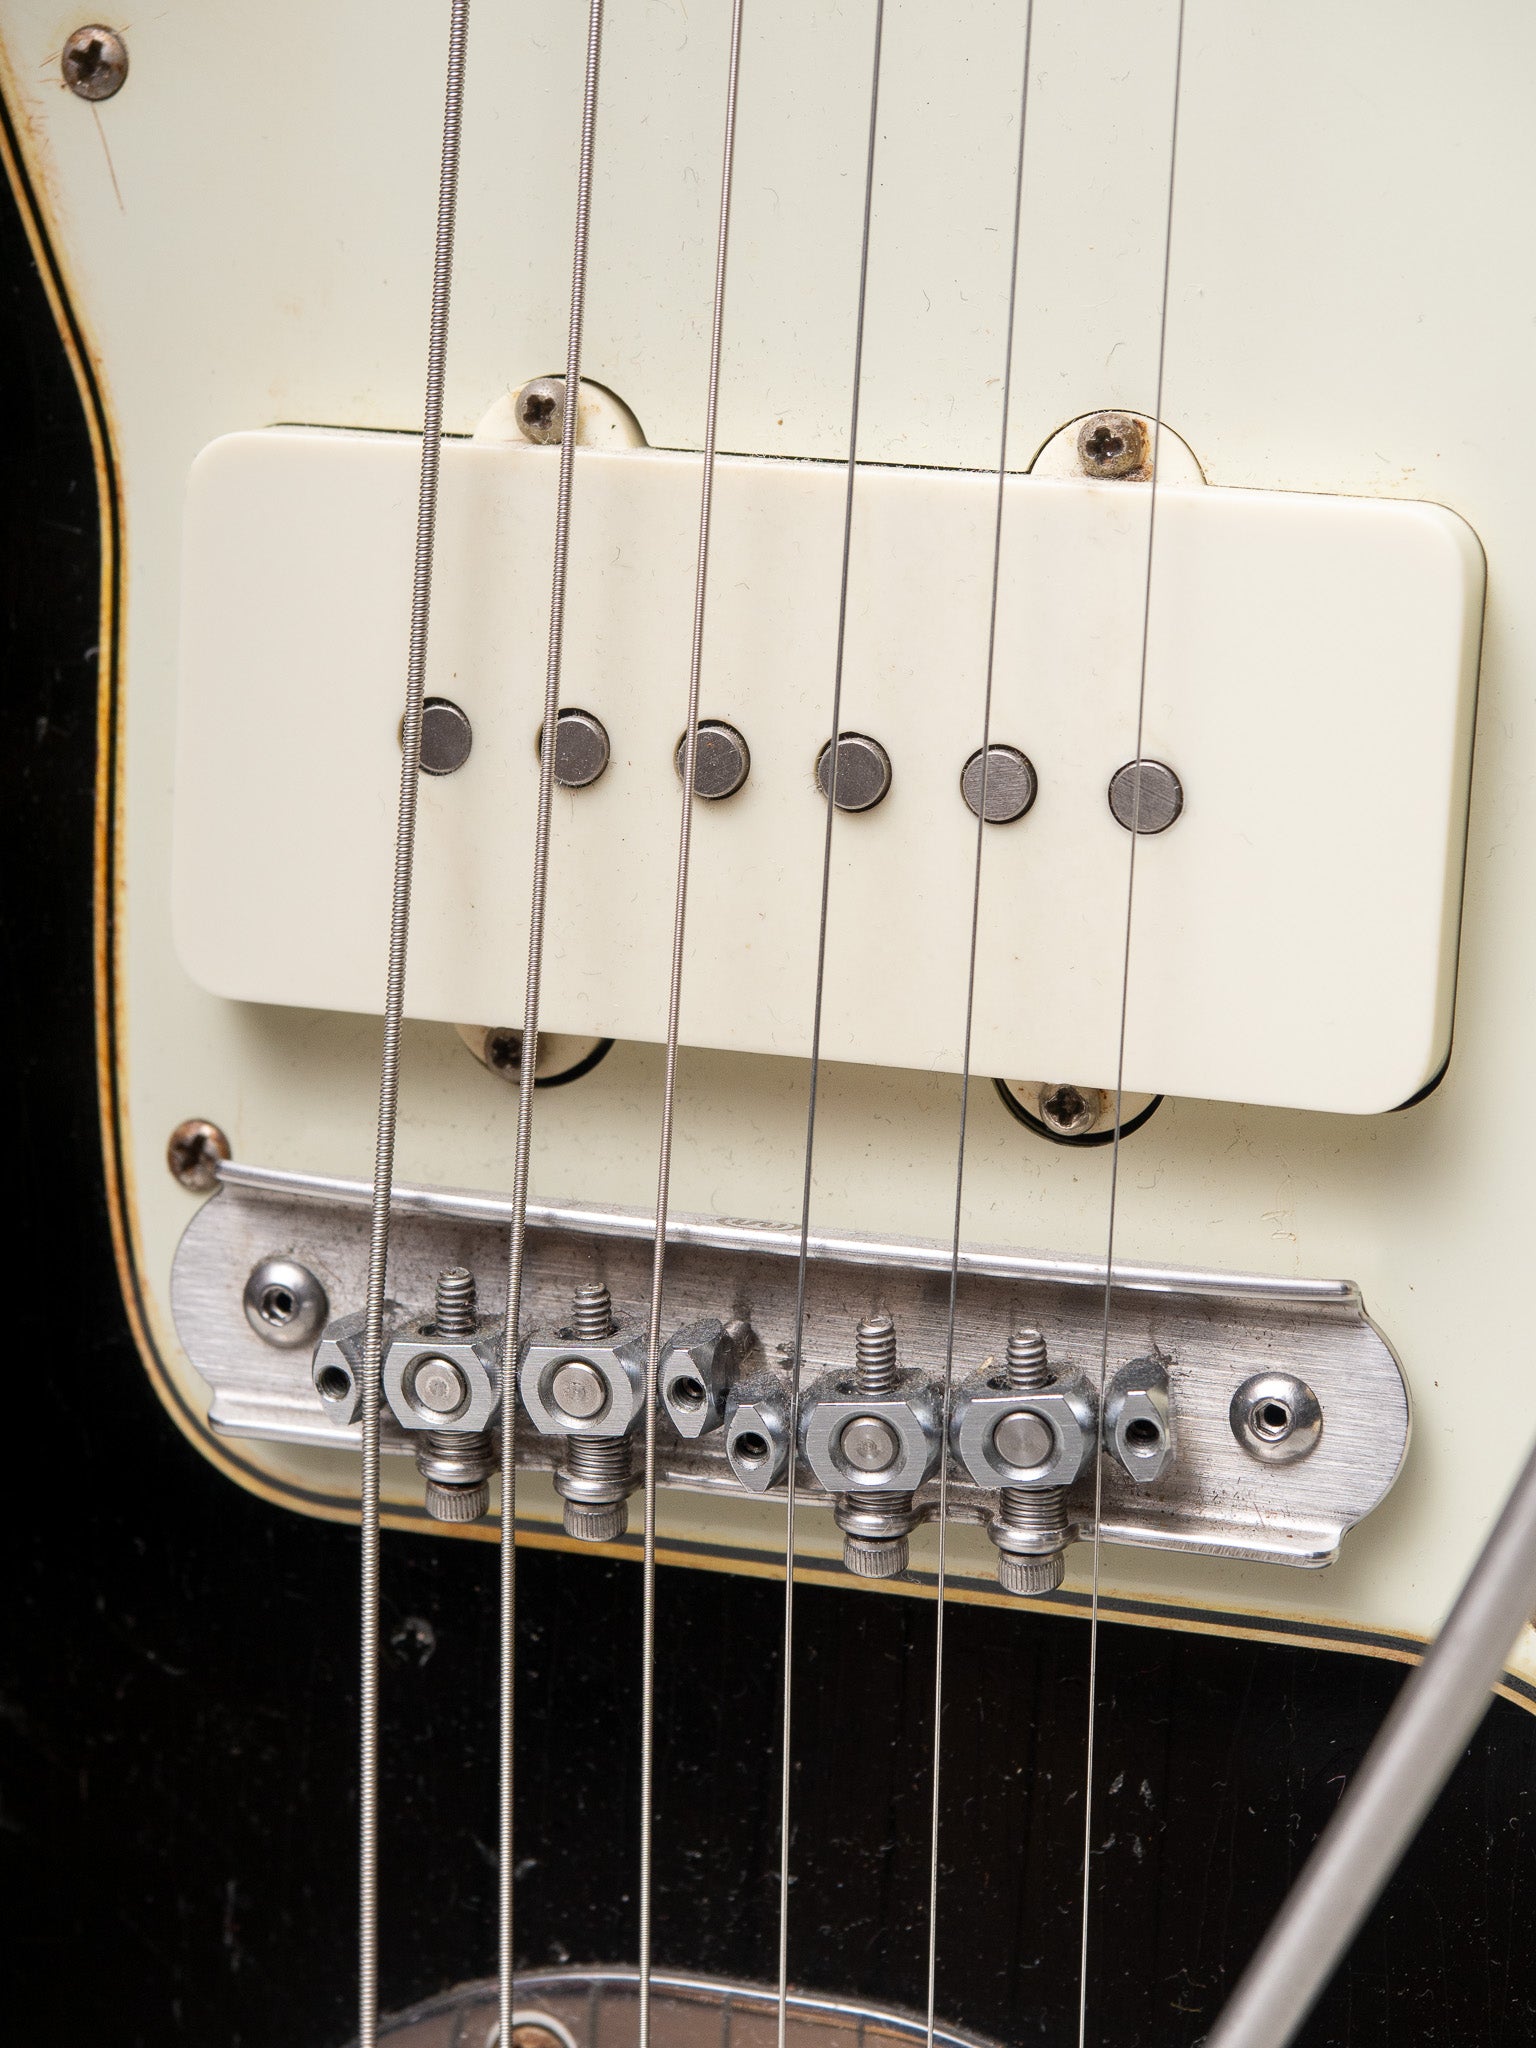 2014 Fender Custom Shop Jazzmaster '64 Reissue